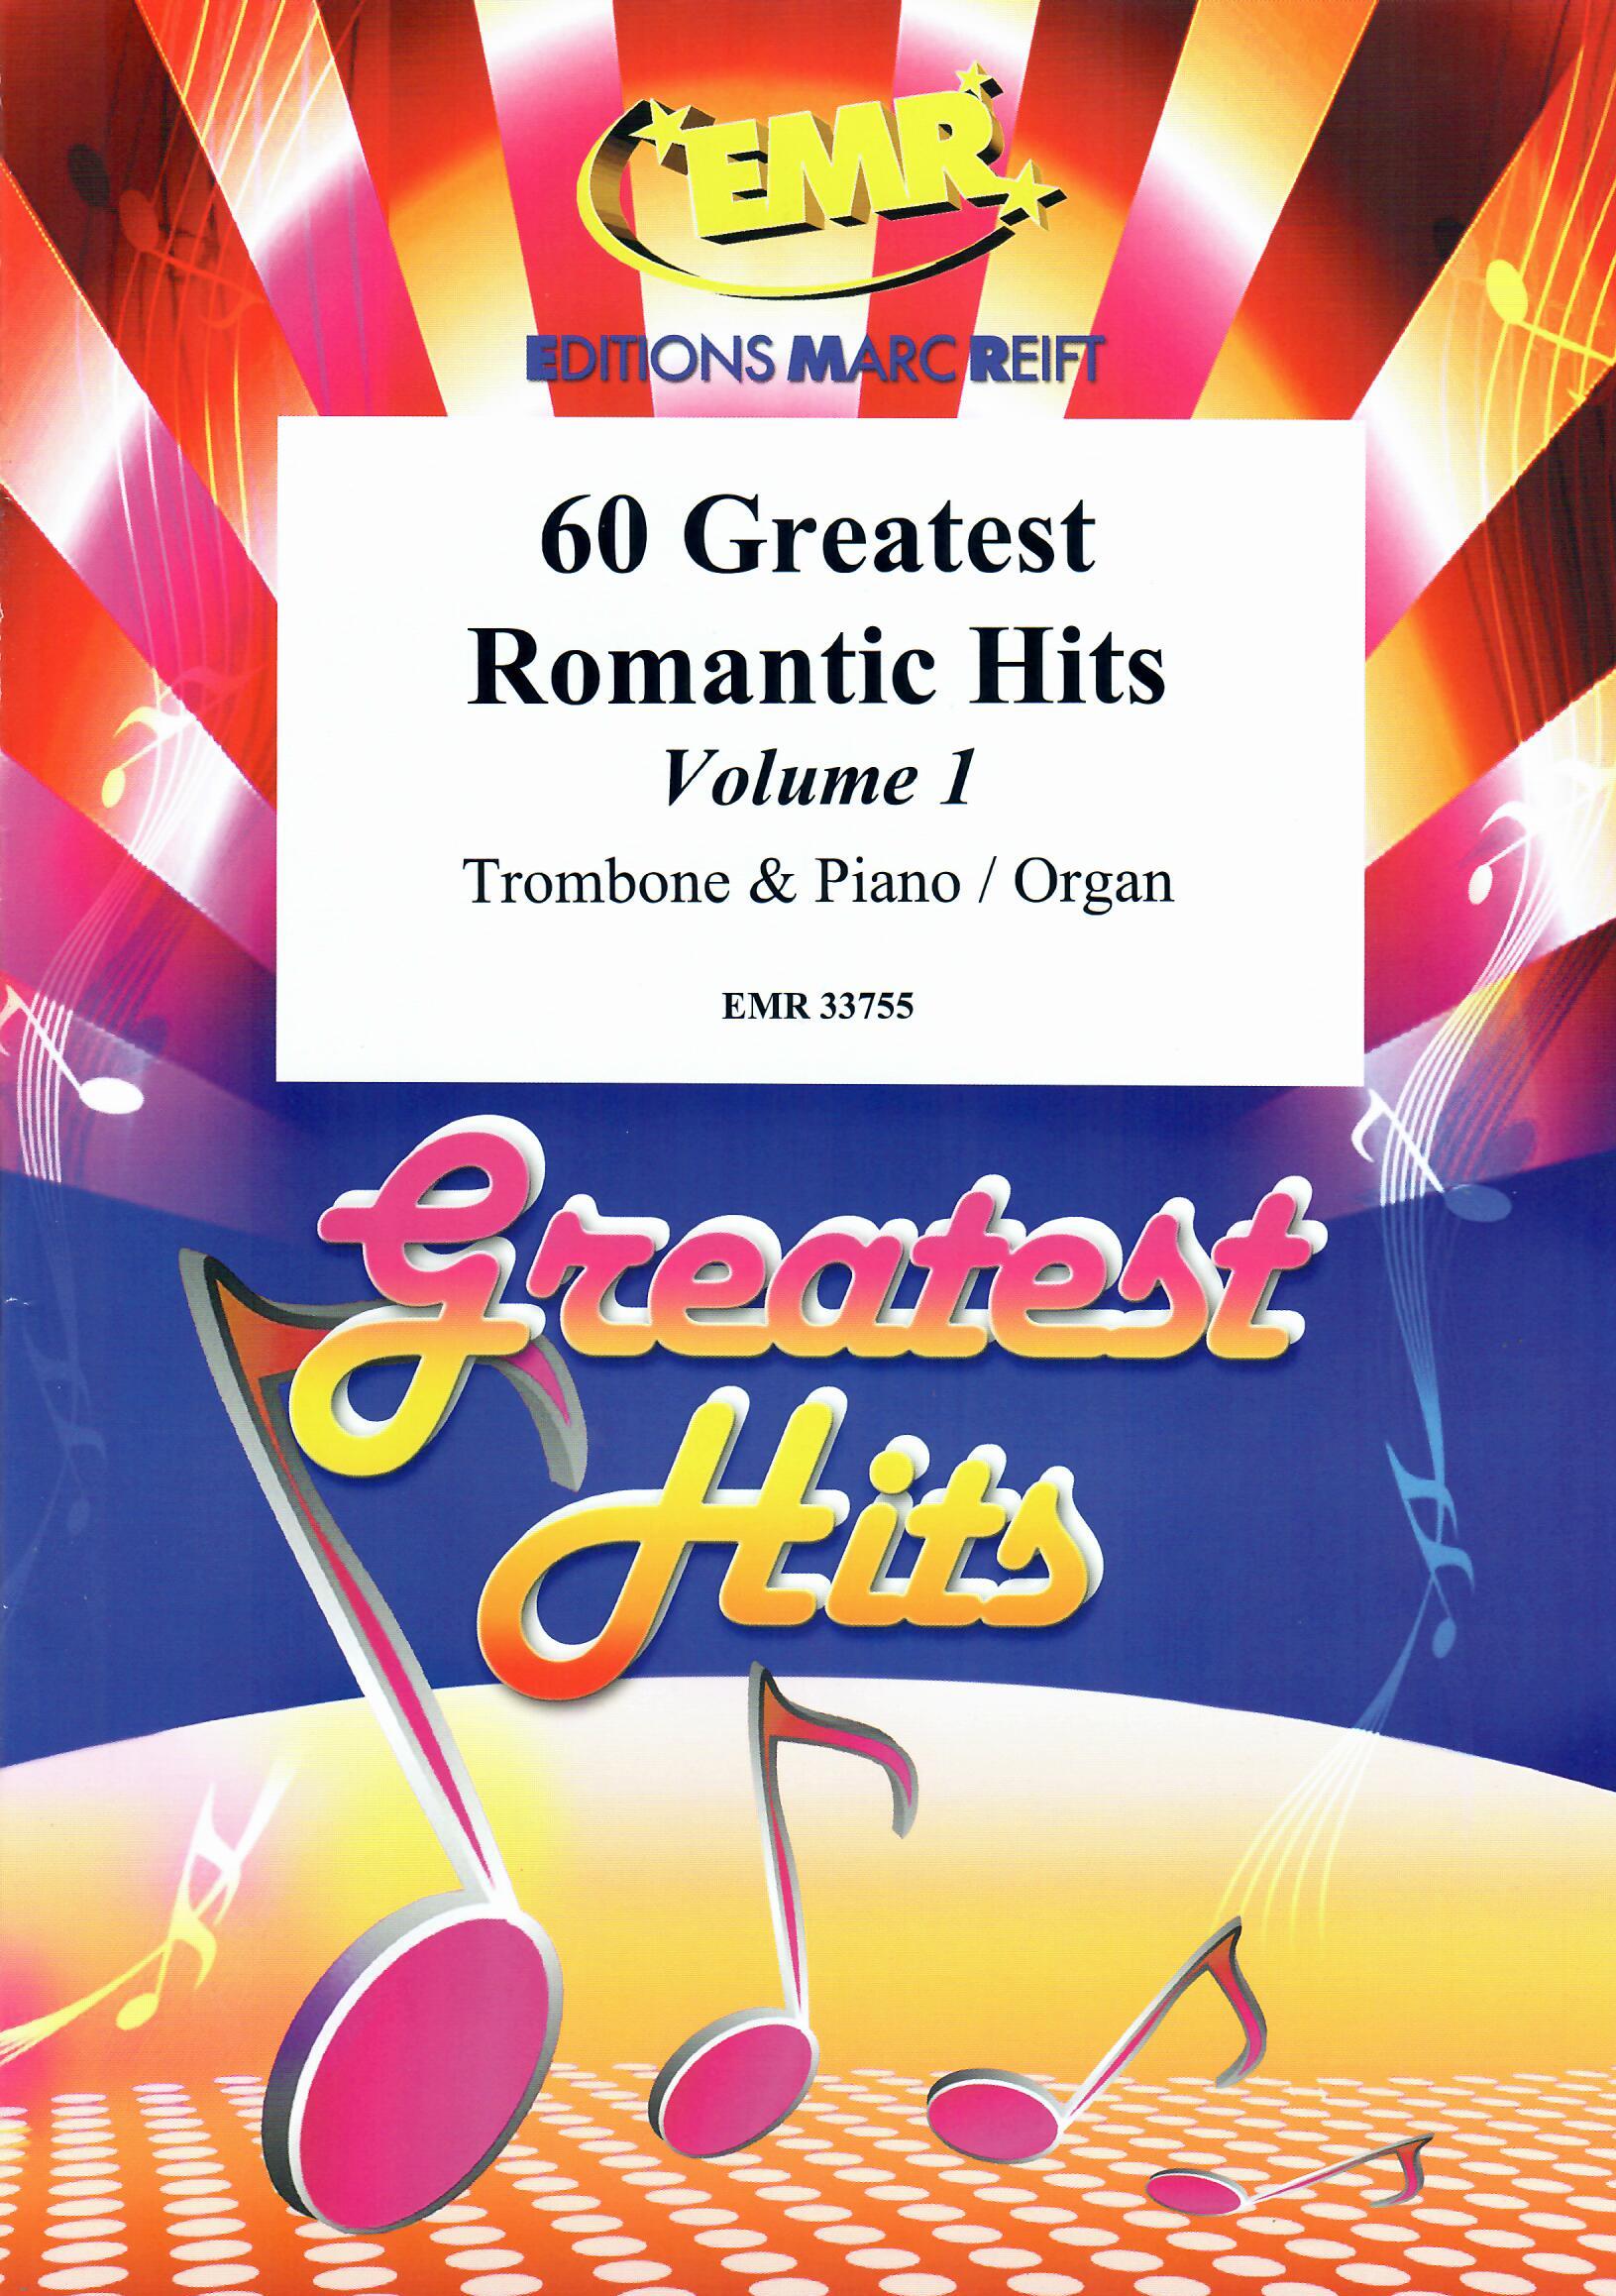 60 GREATEST ROMANTIC HITS VOLUME 1, SOLOS - Trombone